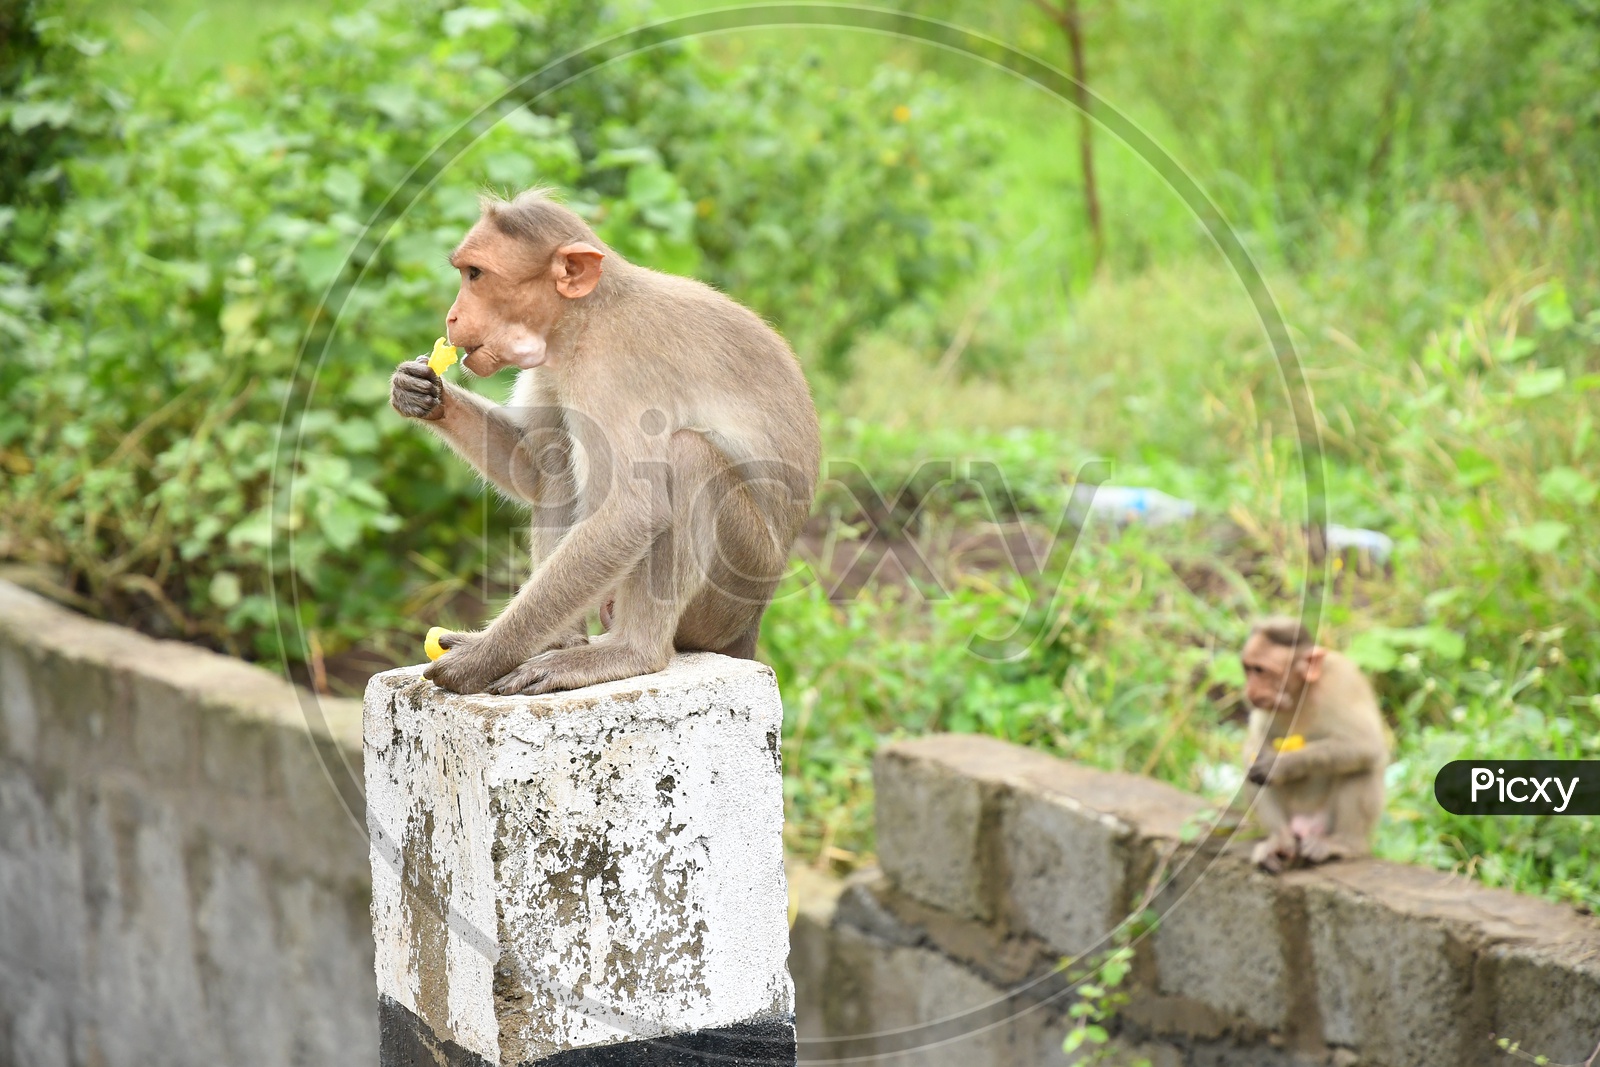 A Monkey eating gold finger snacks sitting on the block